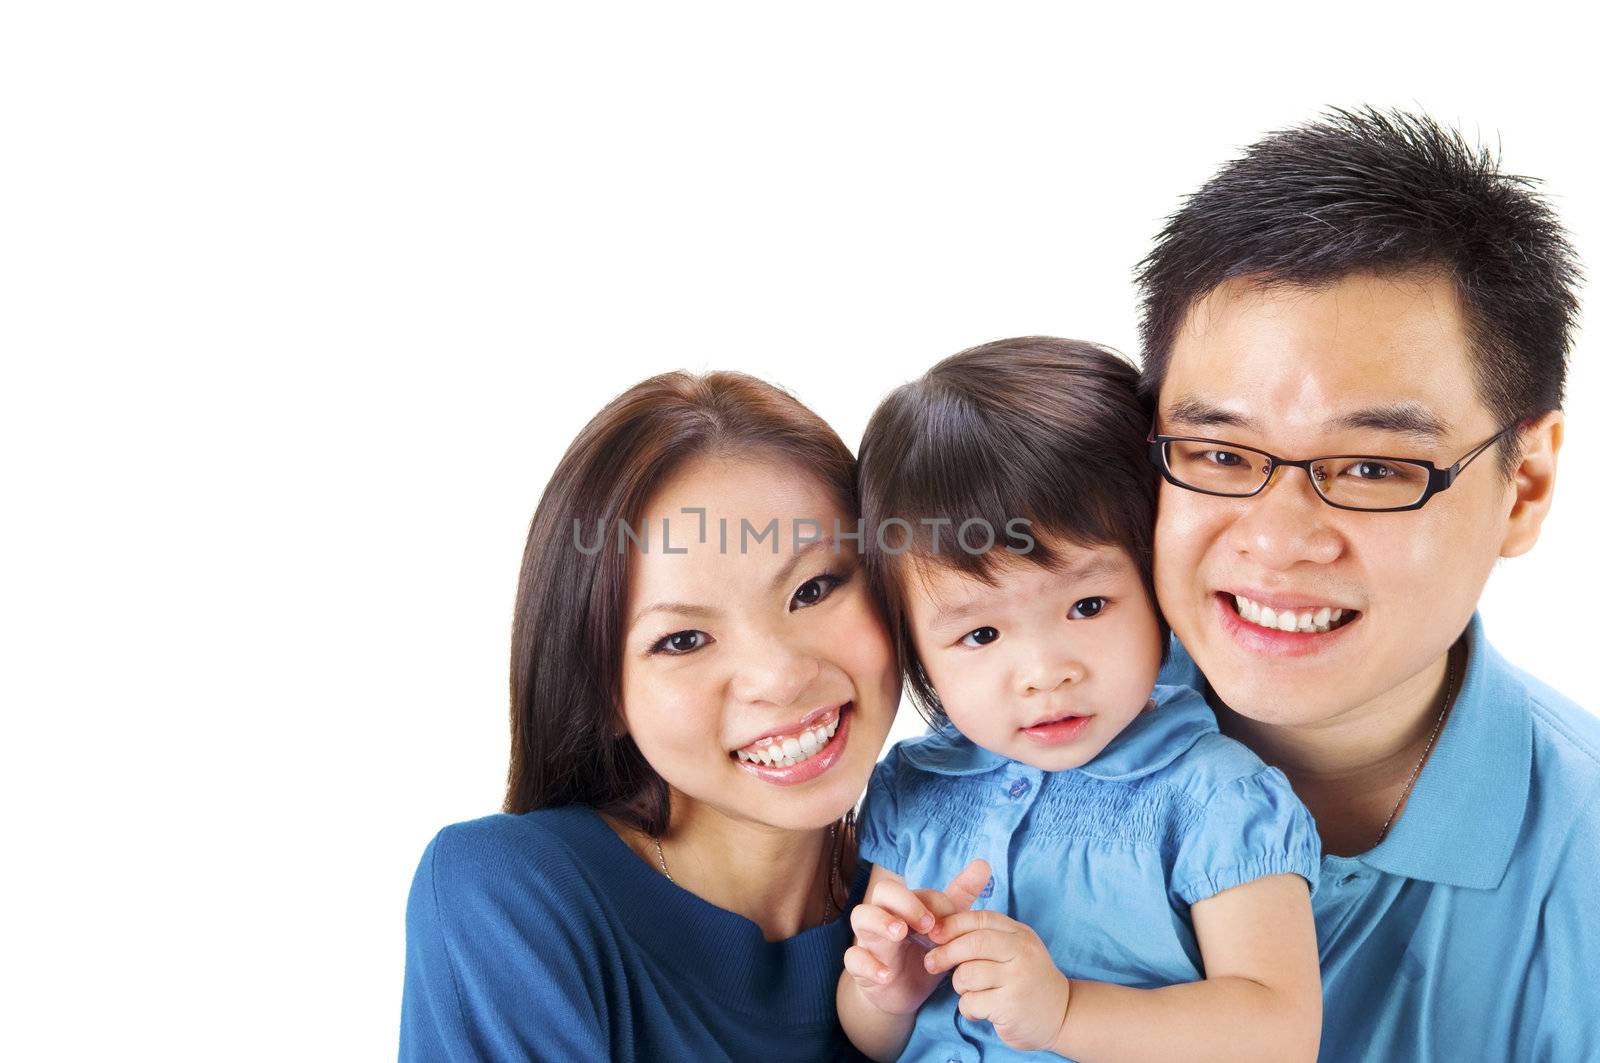 Asian family by szefei